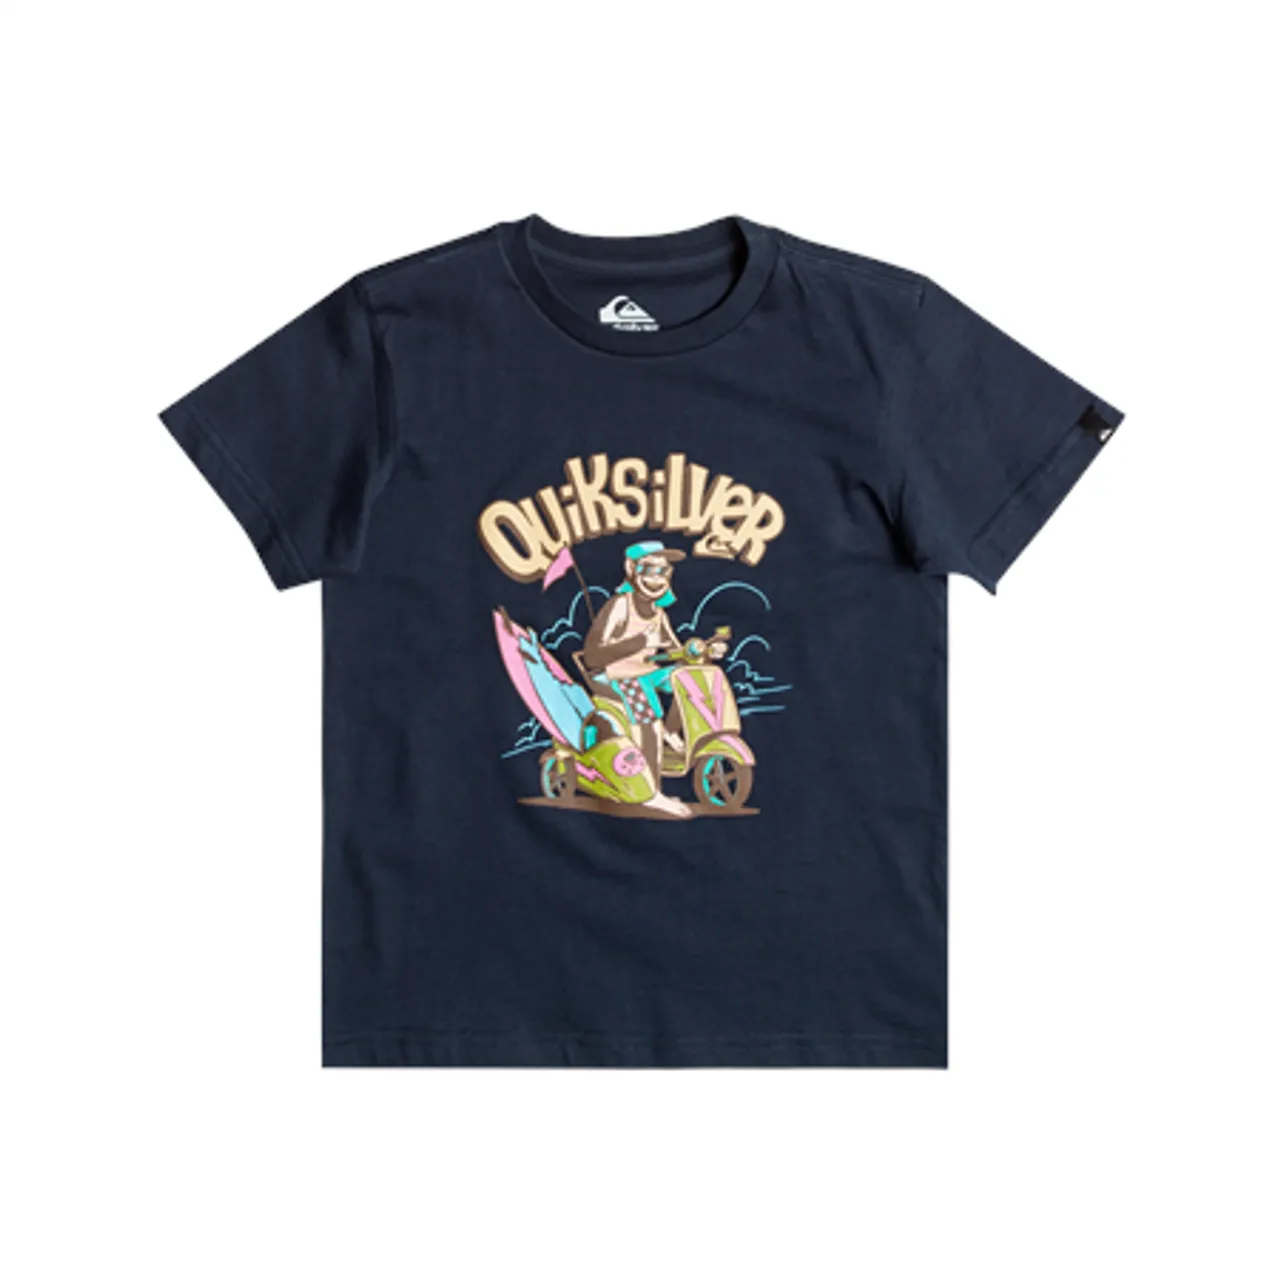 Quiksilver Boys Monkey Business T-Shirt - Navy Blazer